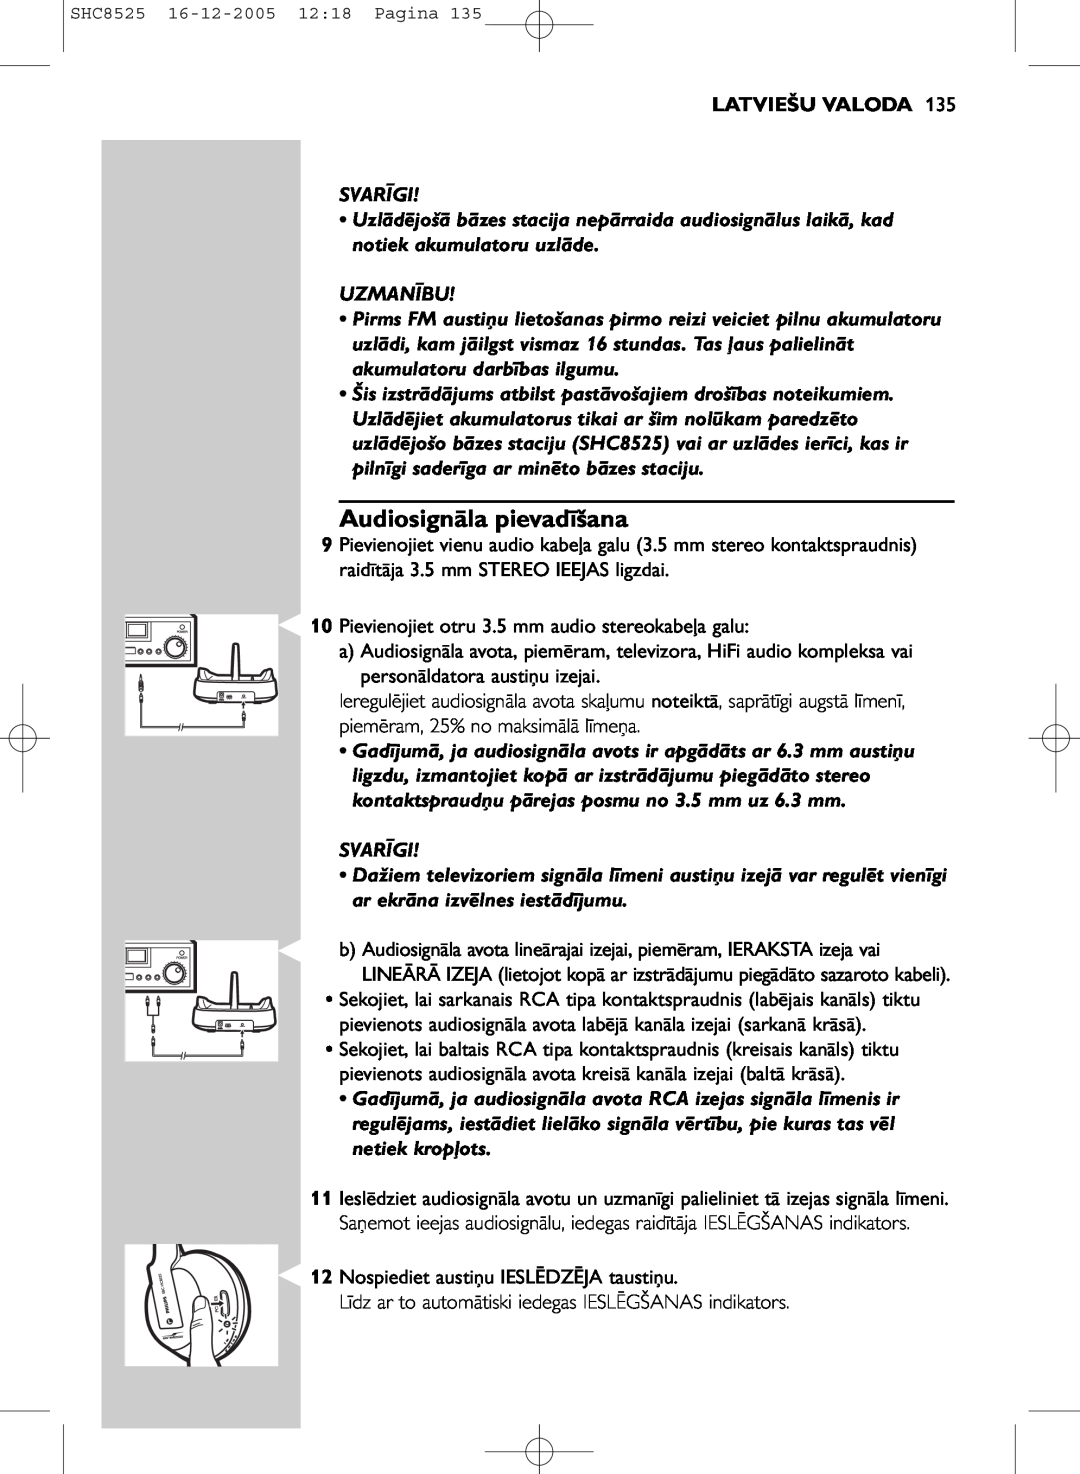 Event electronic SHC8525 manual Audiosignāla pievadīšana, Latviešu Valoda 